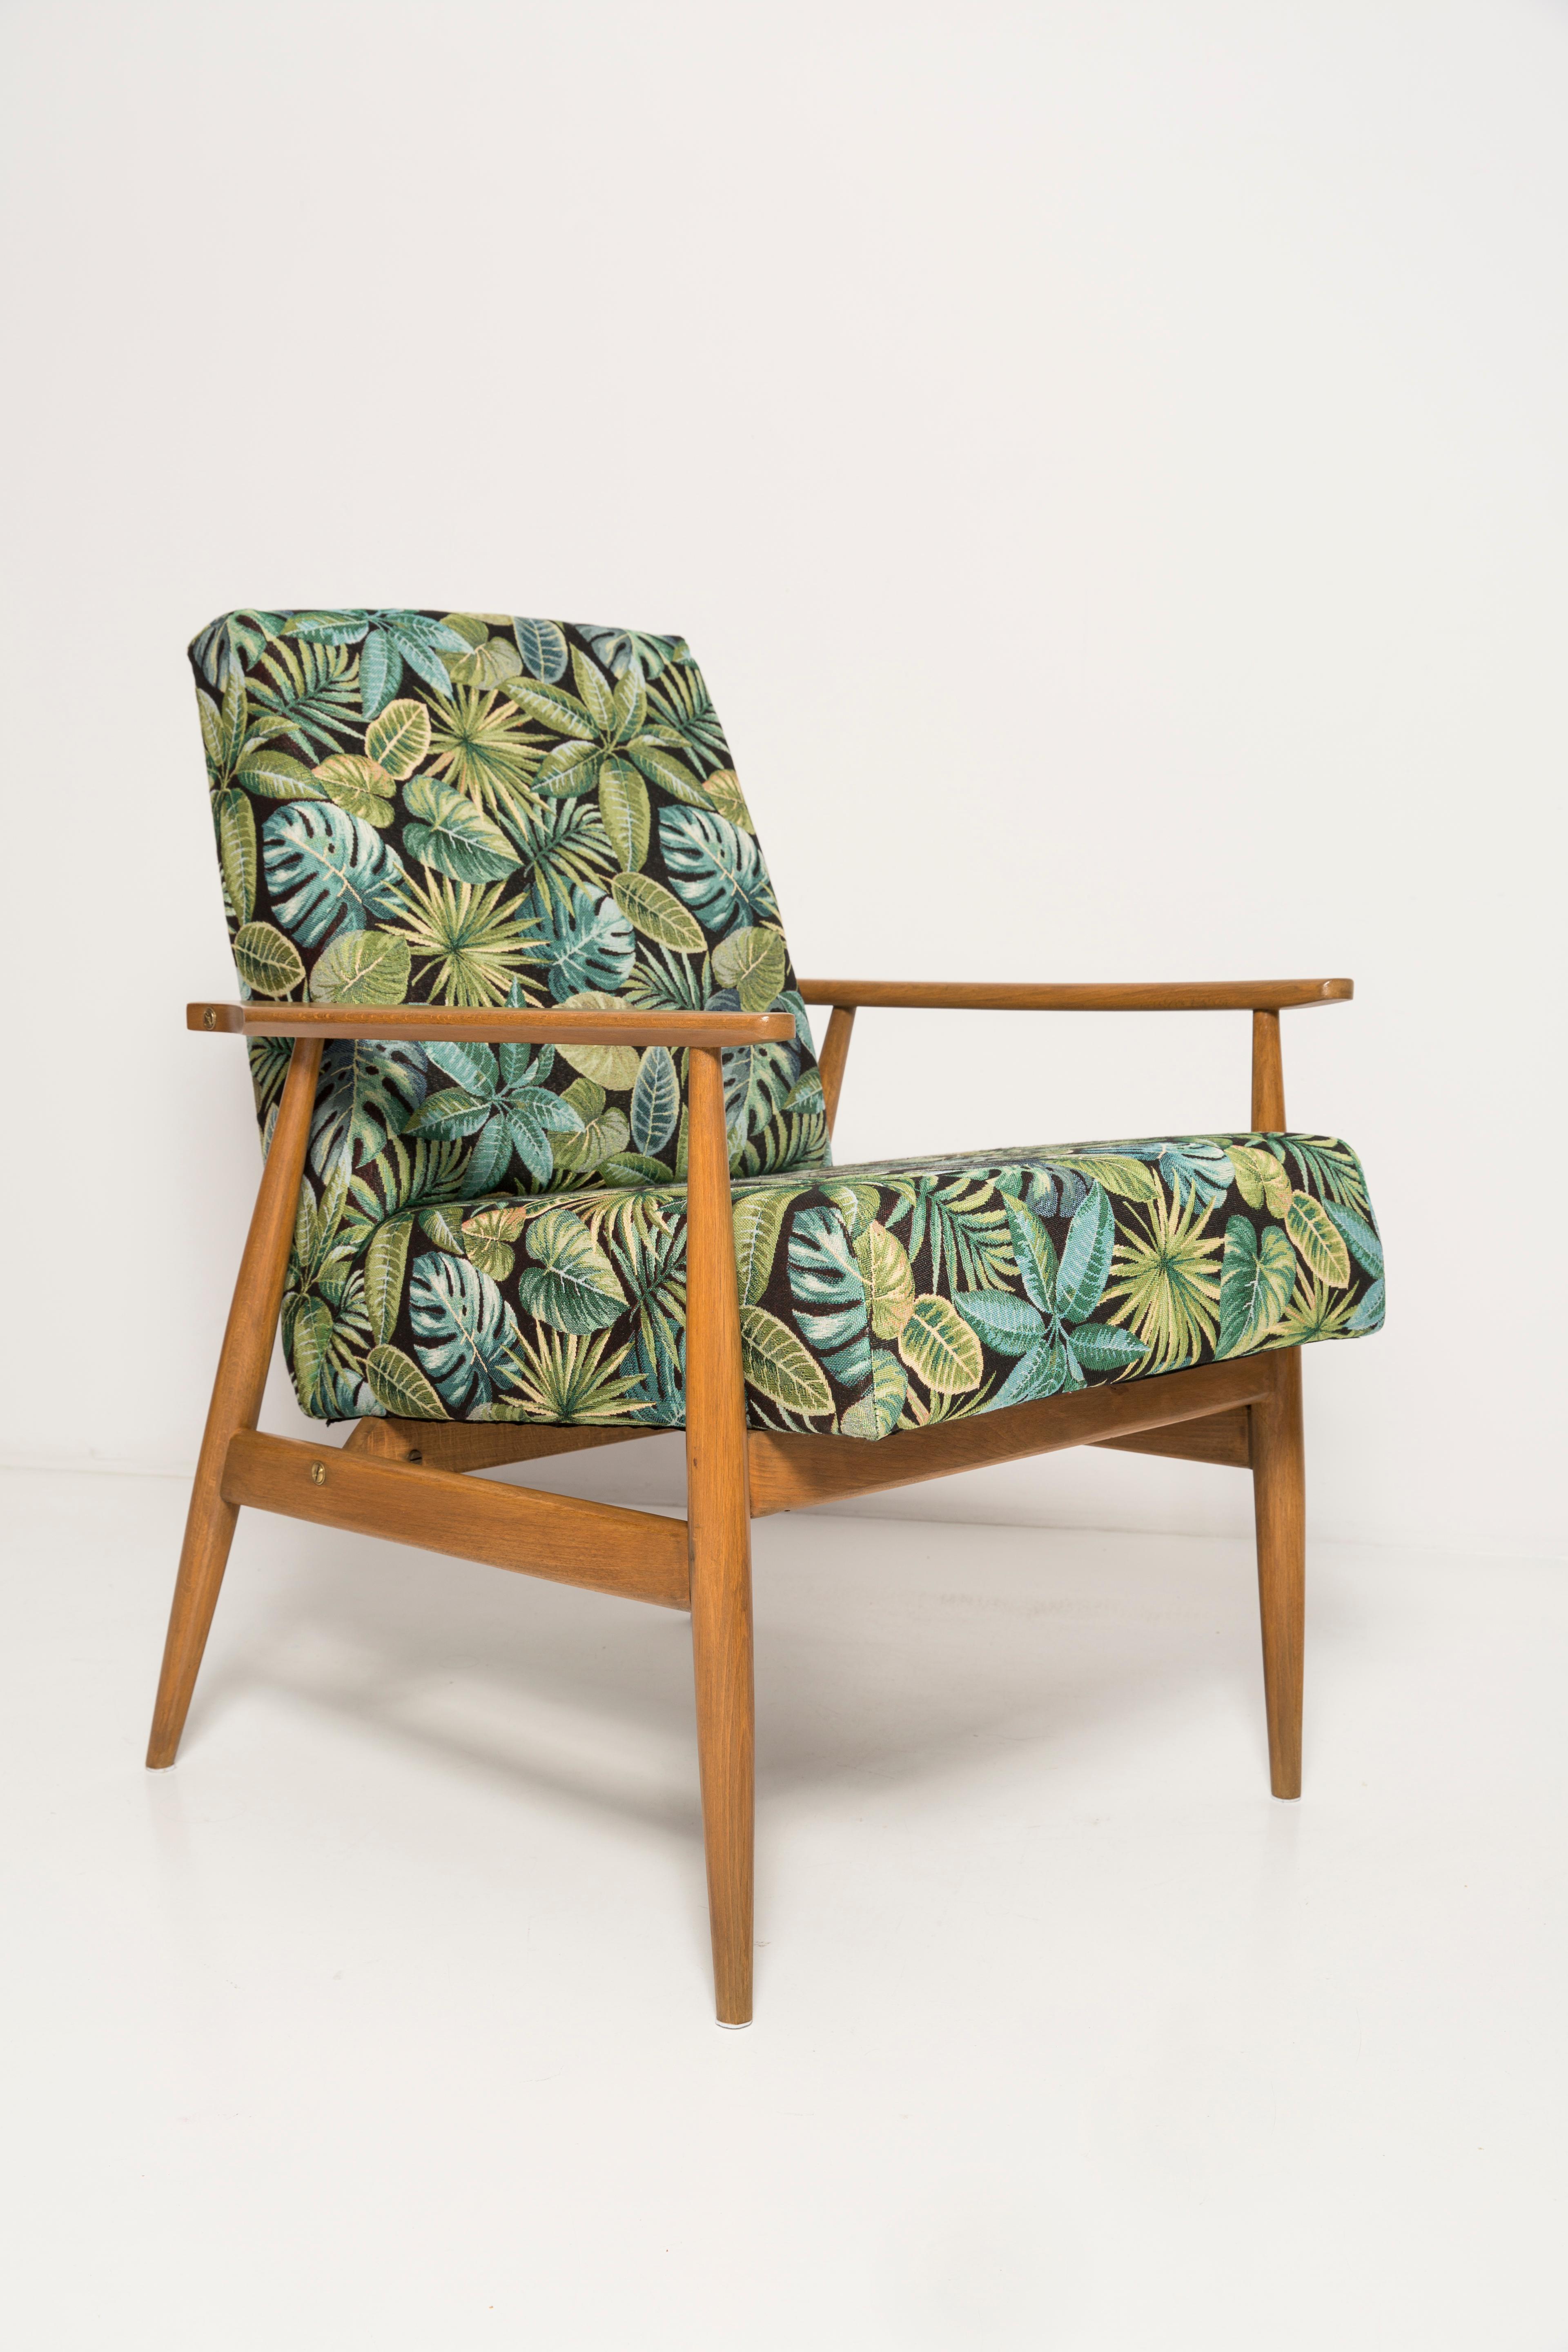 Textile Mid-Century Green Leaves Jacquard Dante Armchair, H. Lis, 1960s For Sale